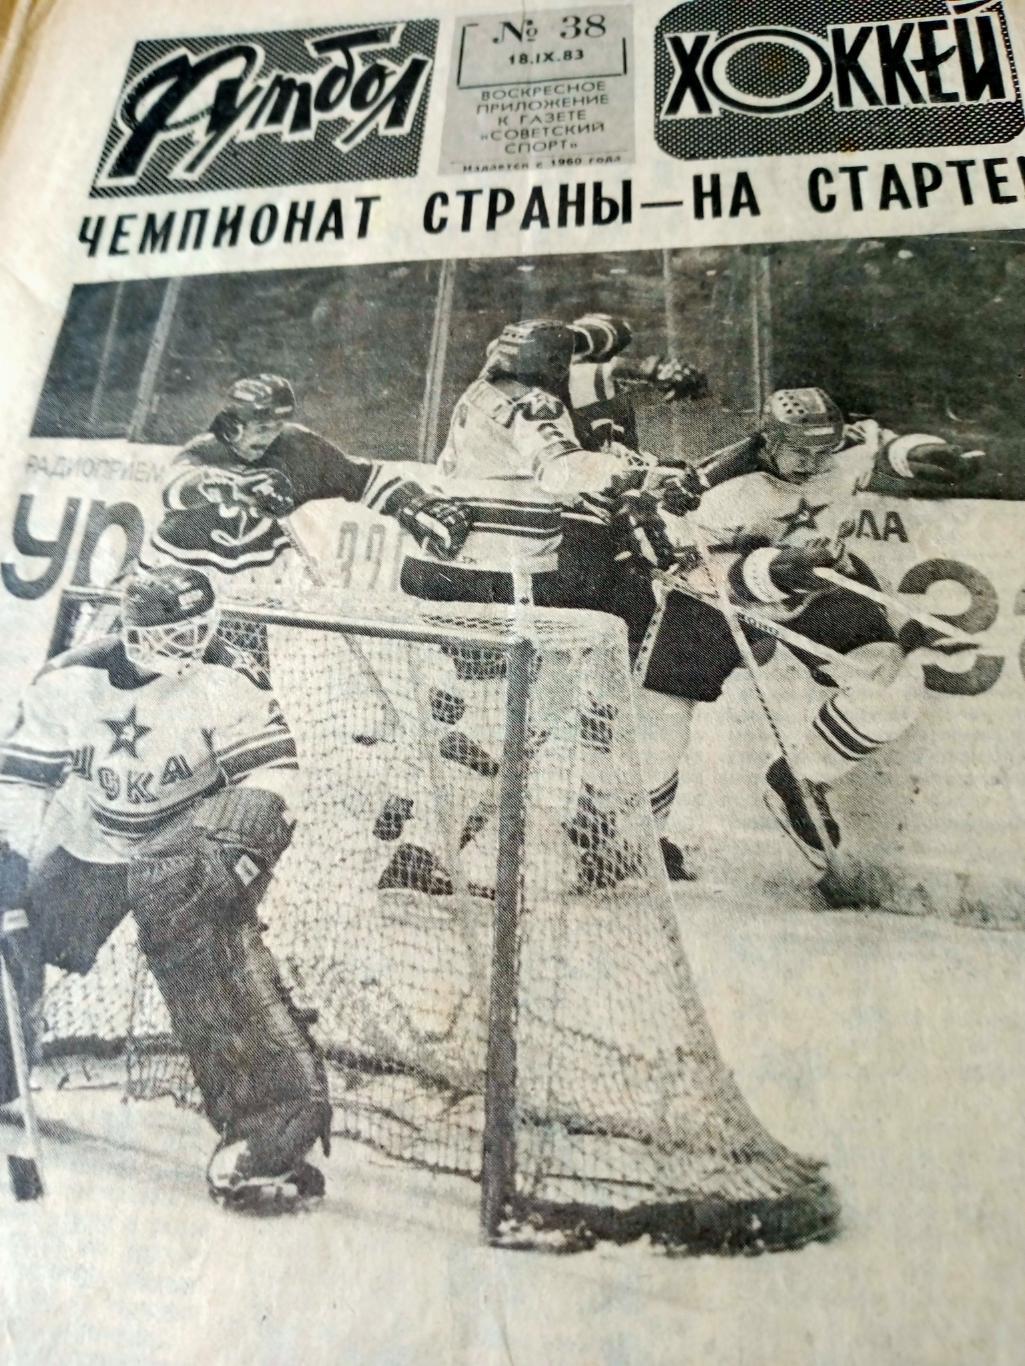 Футбол-Хоккей. 1983 год, №38